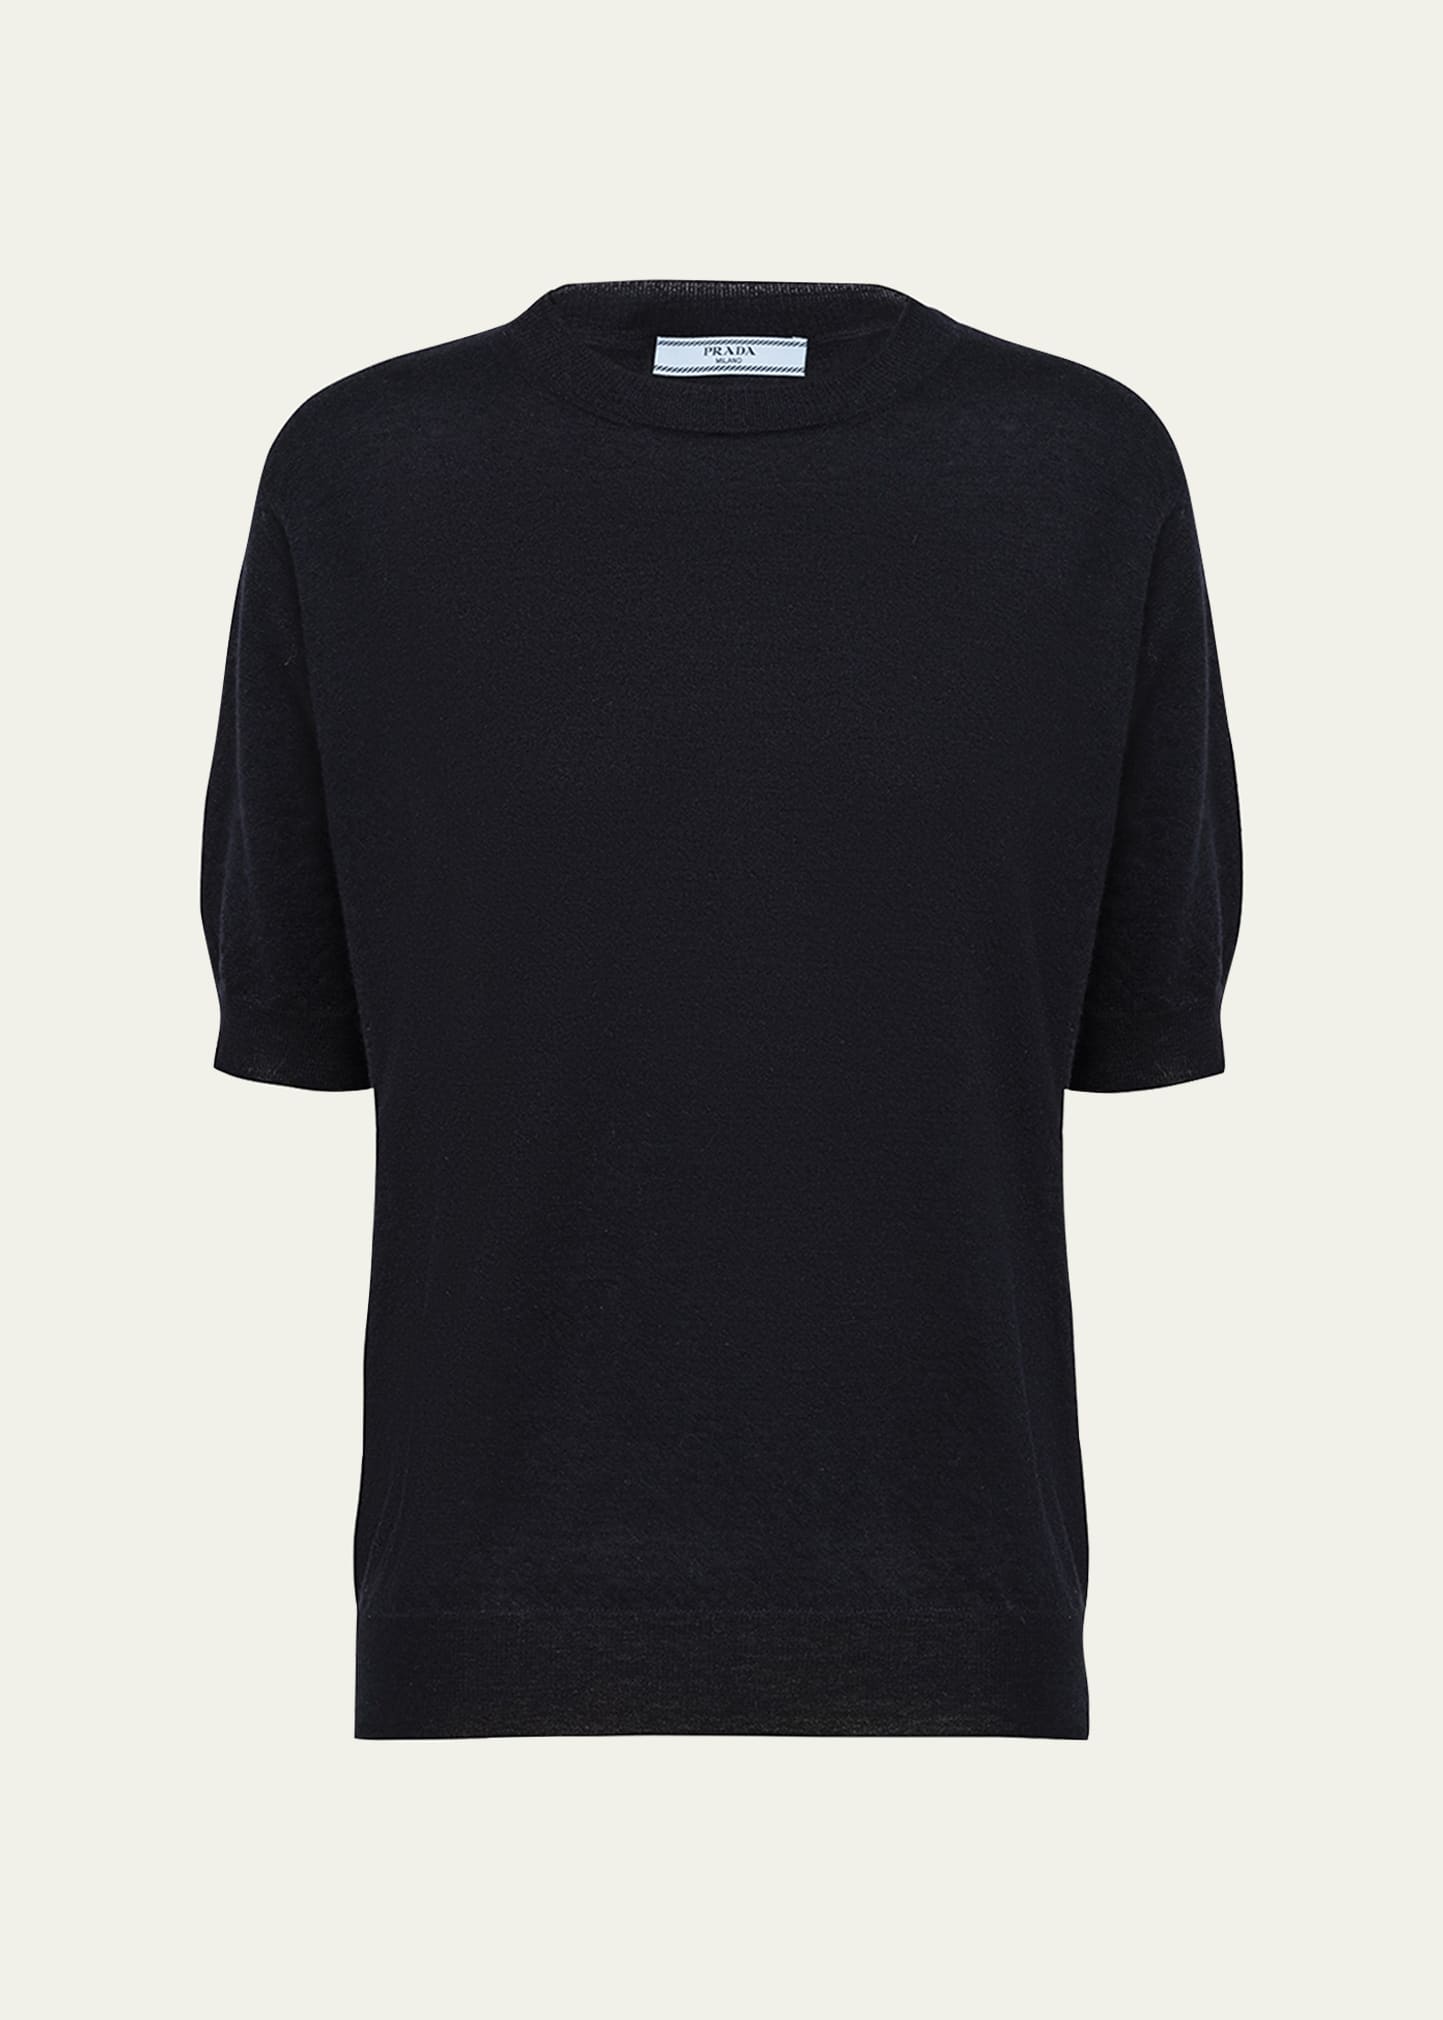 Superfine Cashmere Knit Shirt